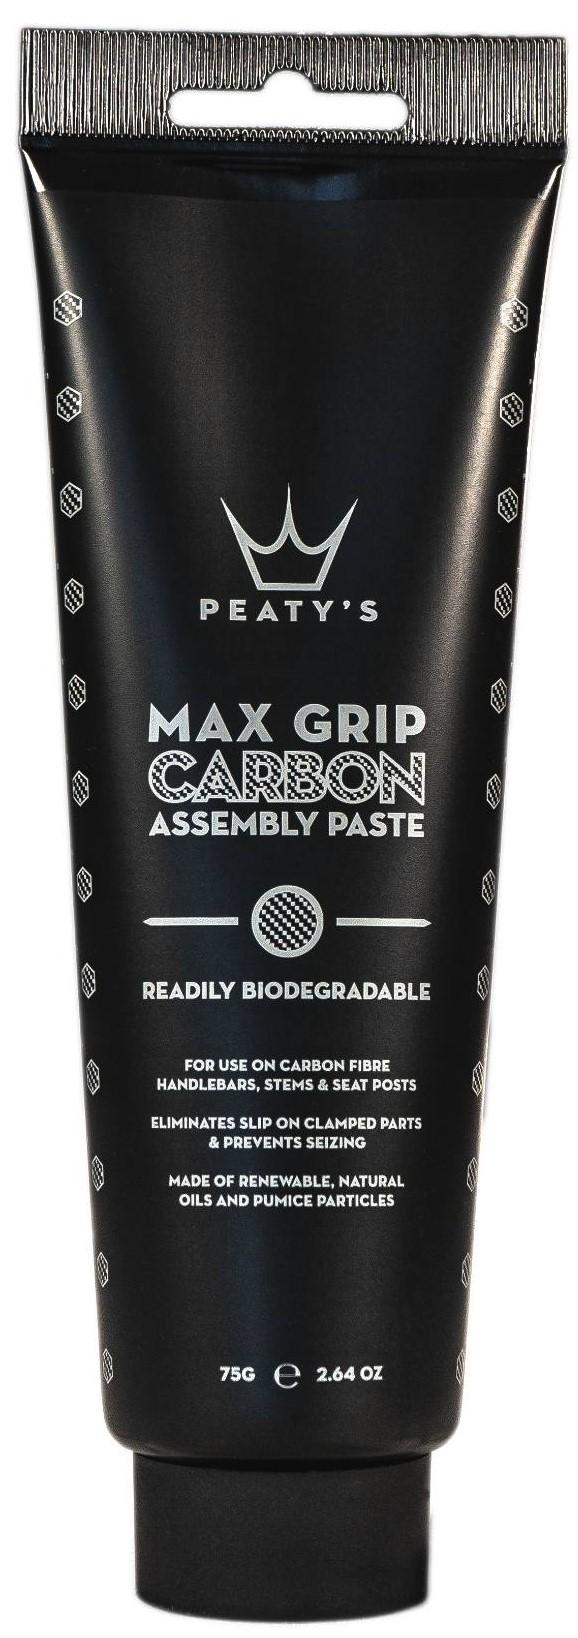 Peatys Max Grip Carbon Assembly Paste - Black